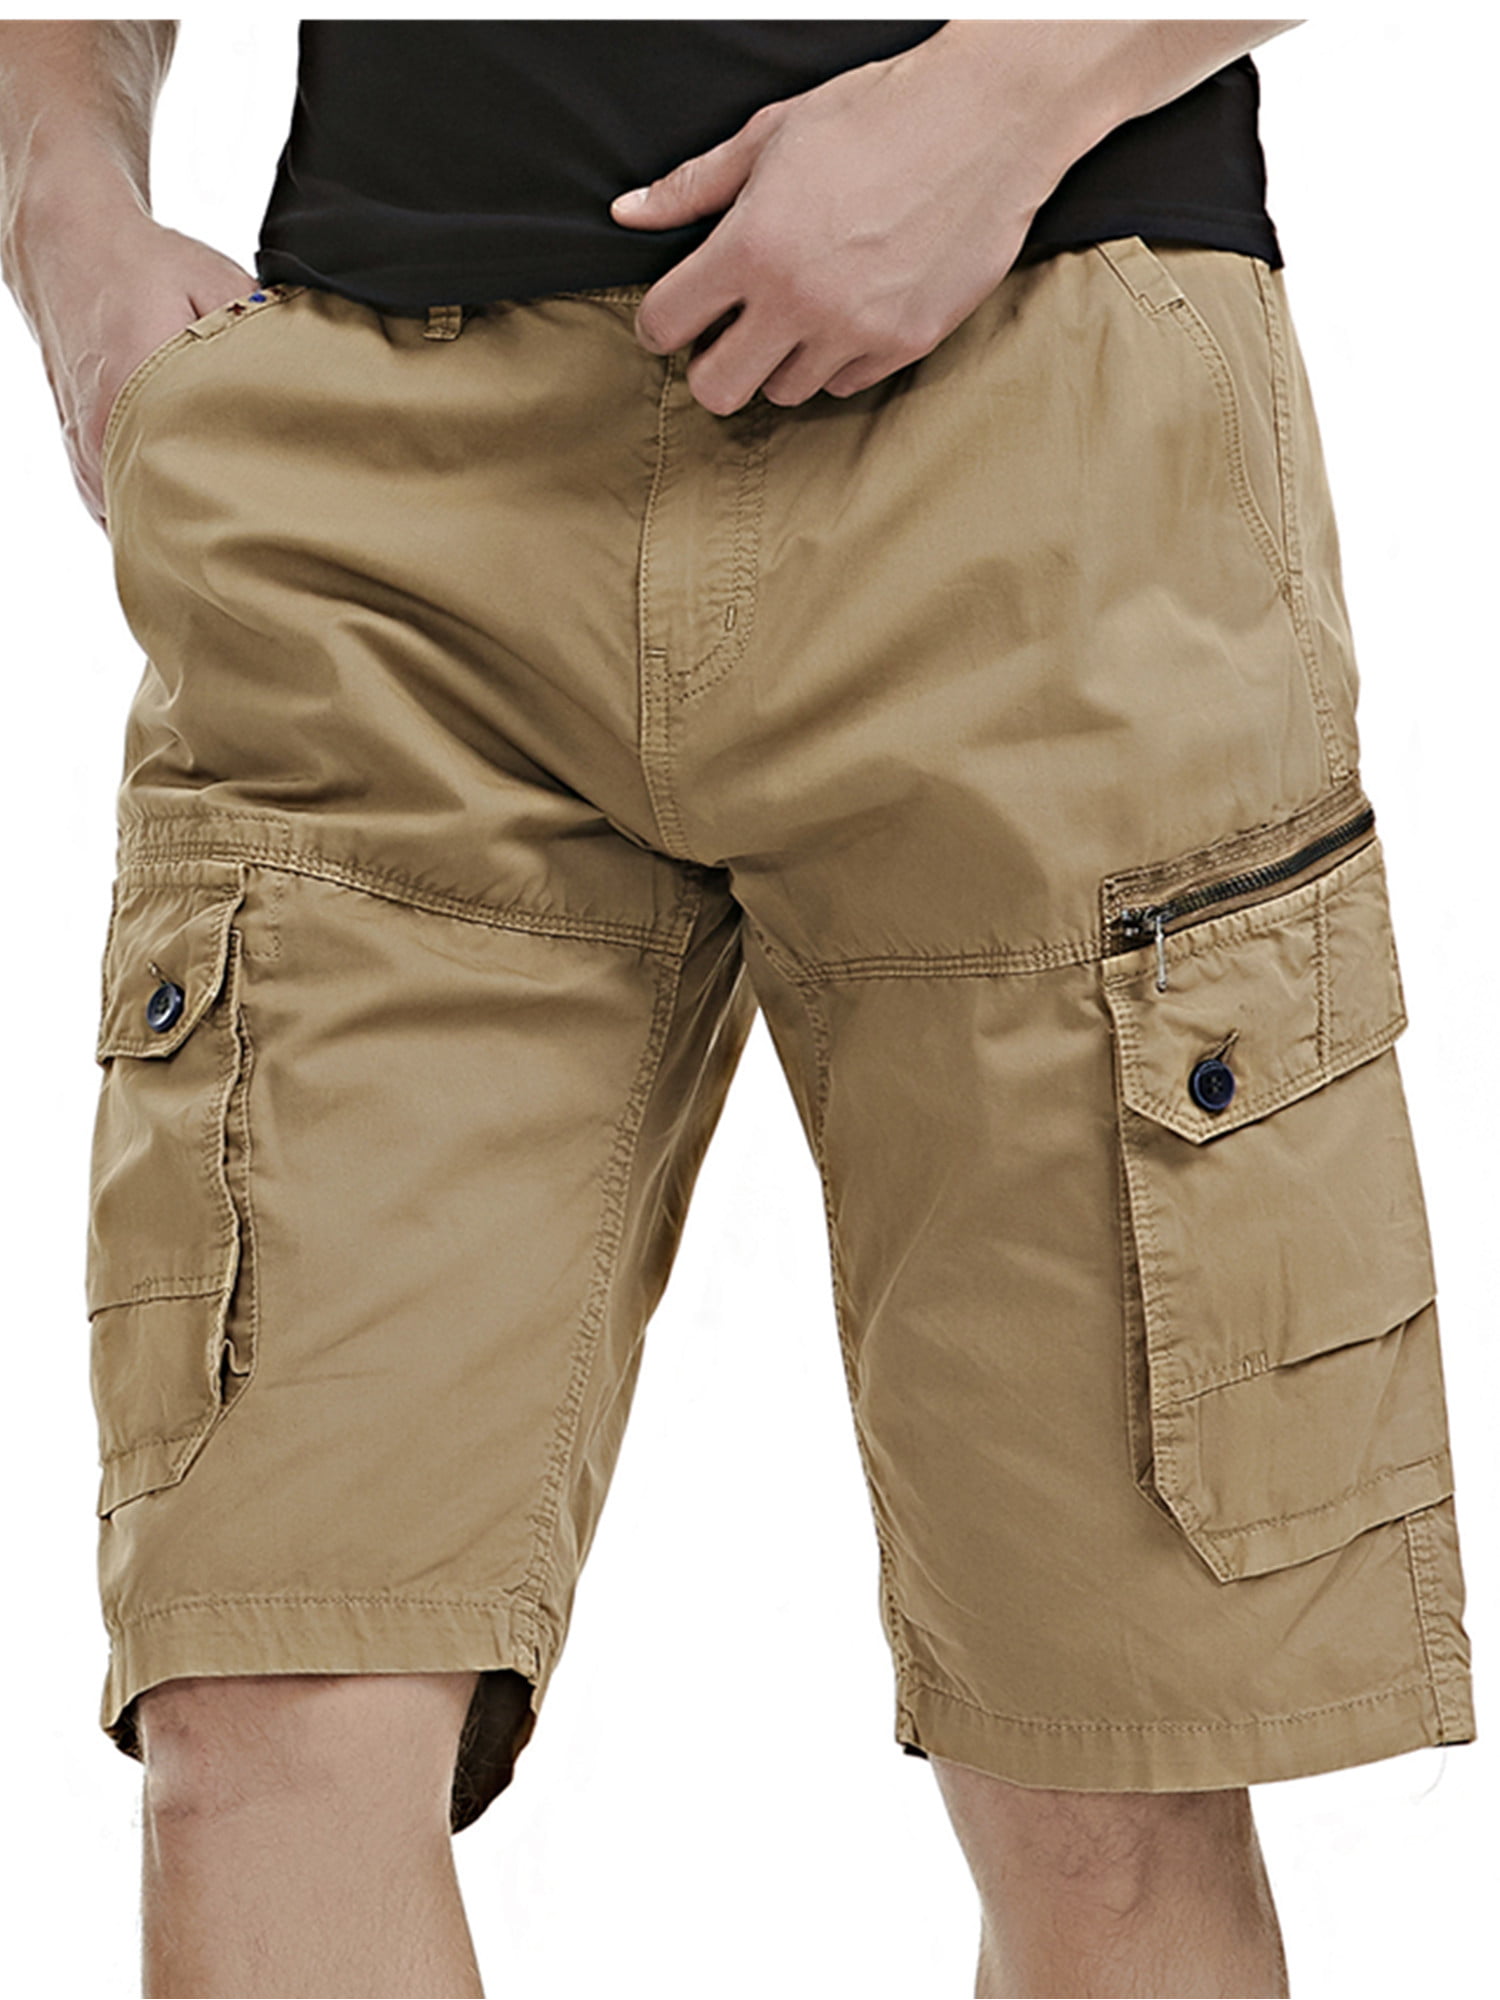 EKLENTSON Mens Outdoor Stretch Waist Thin Quick Drying Shorts Lightweight Slim Fit Cargo Shorts No Belt 